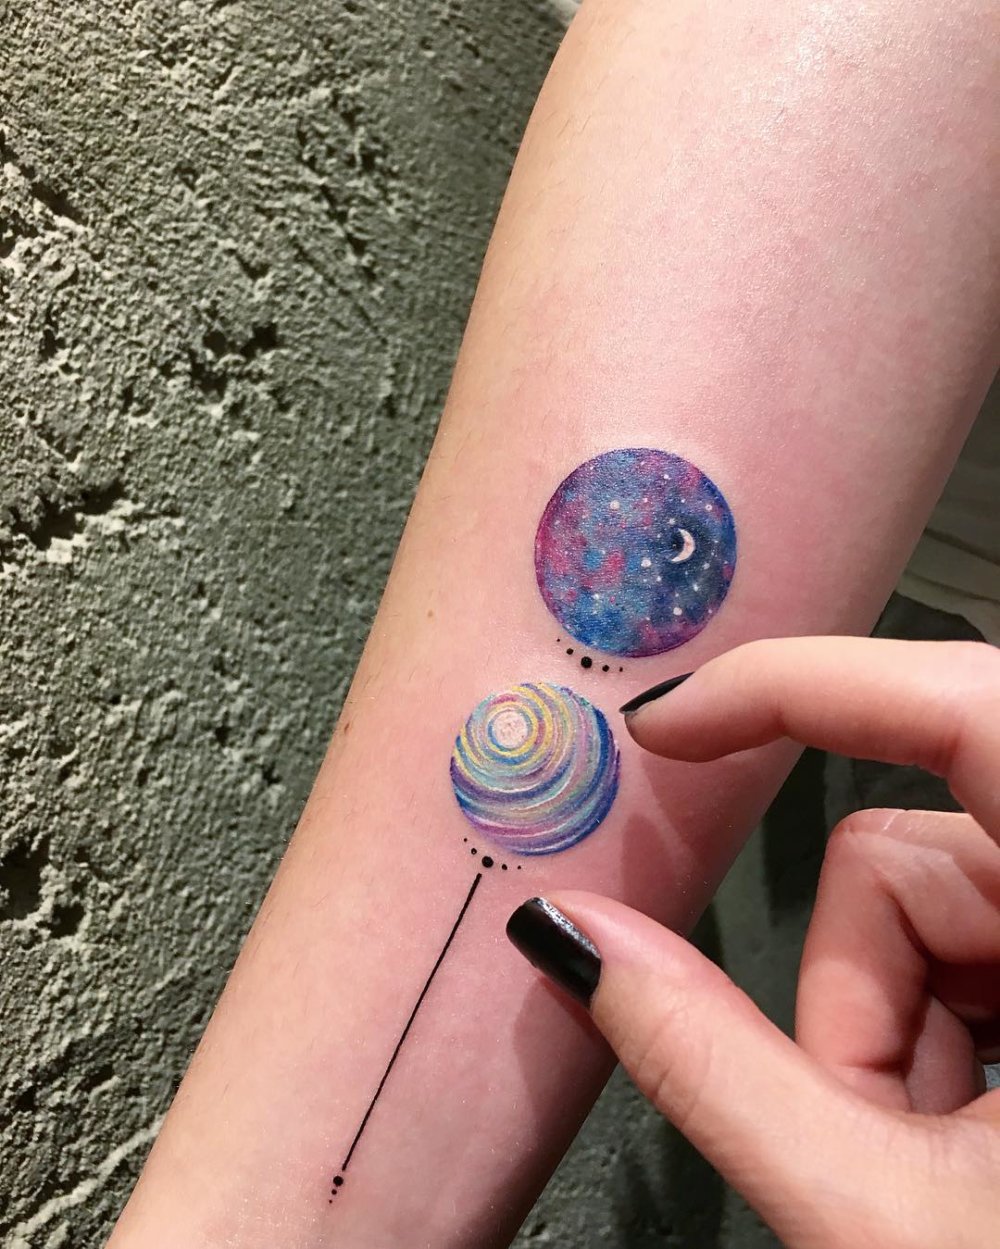 Dazzlingly Beautiful Illustration Tattoos Inside Tiny Circles By Eva Krbdk 21